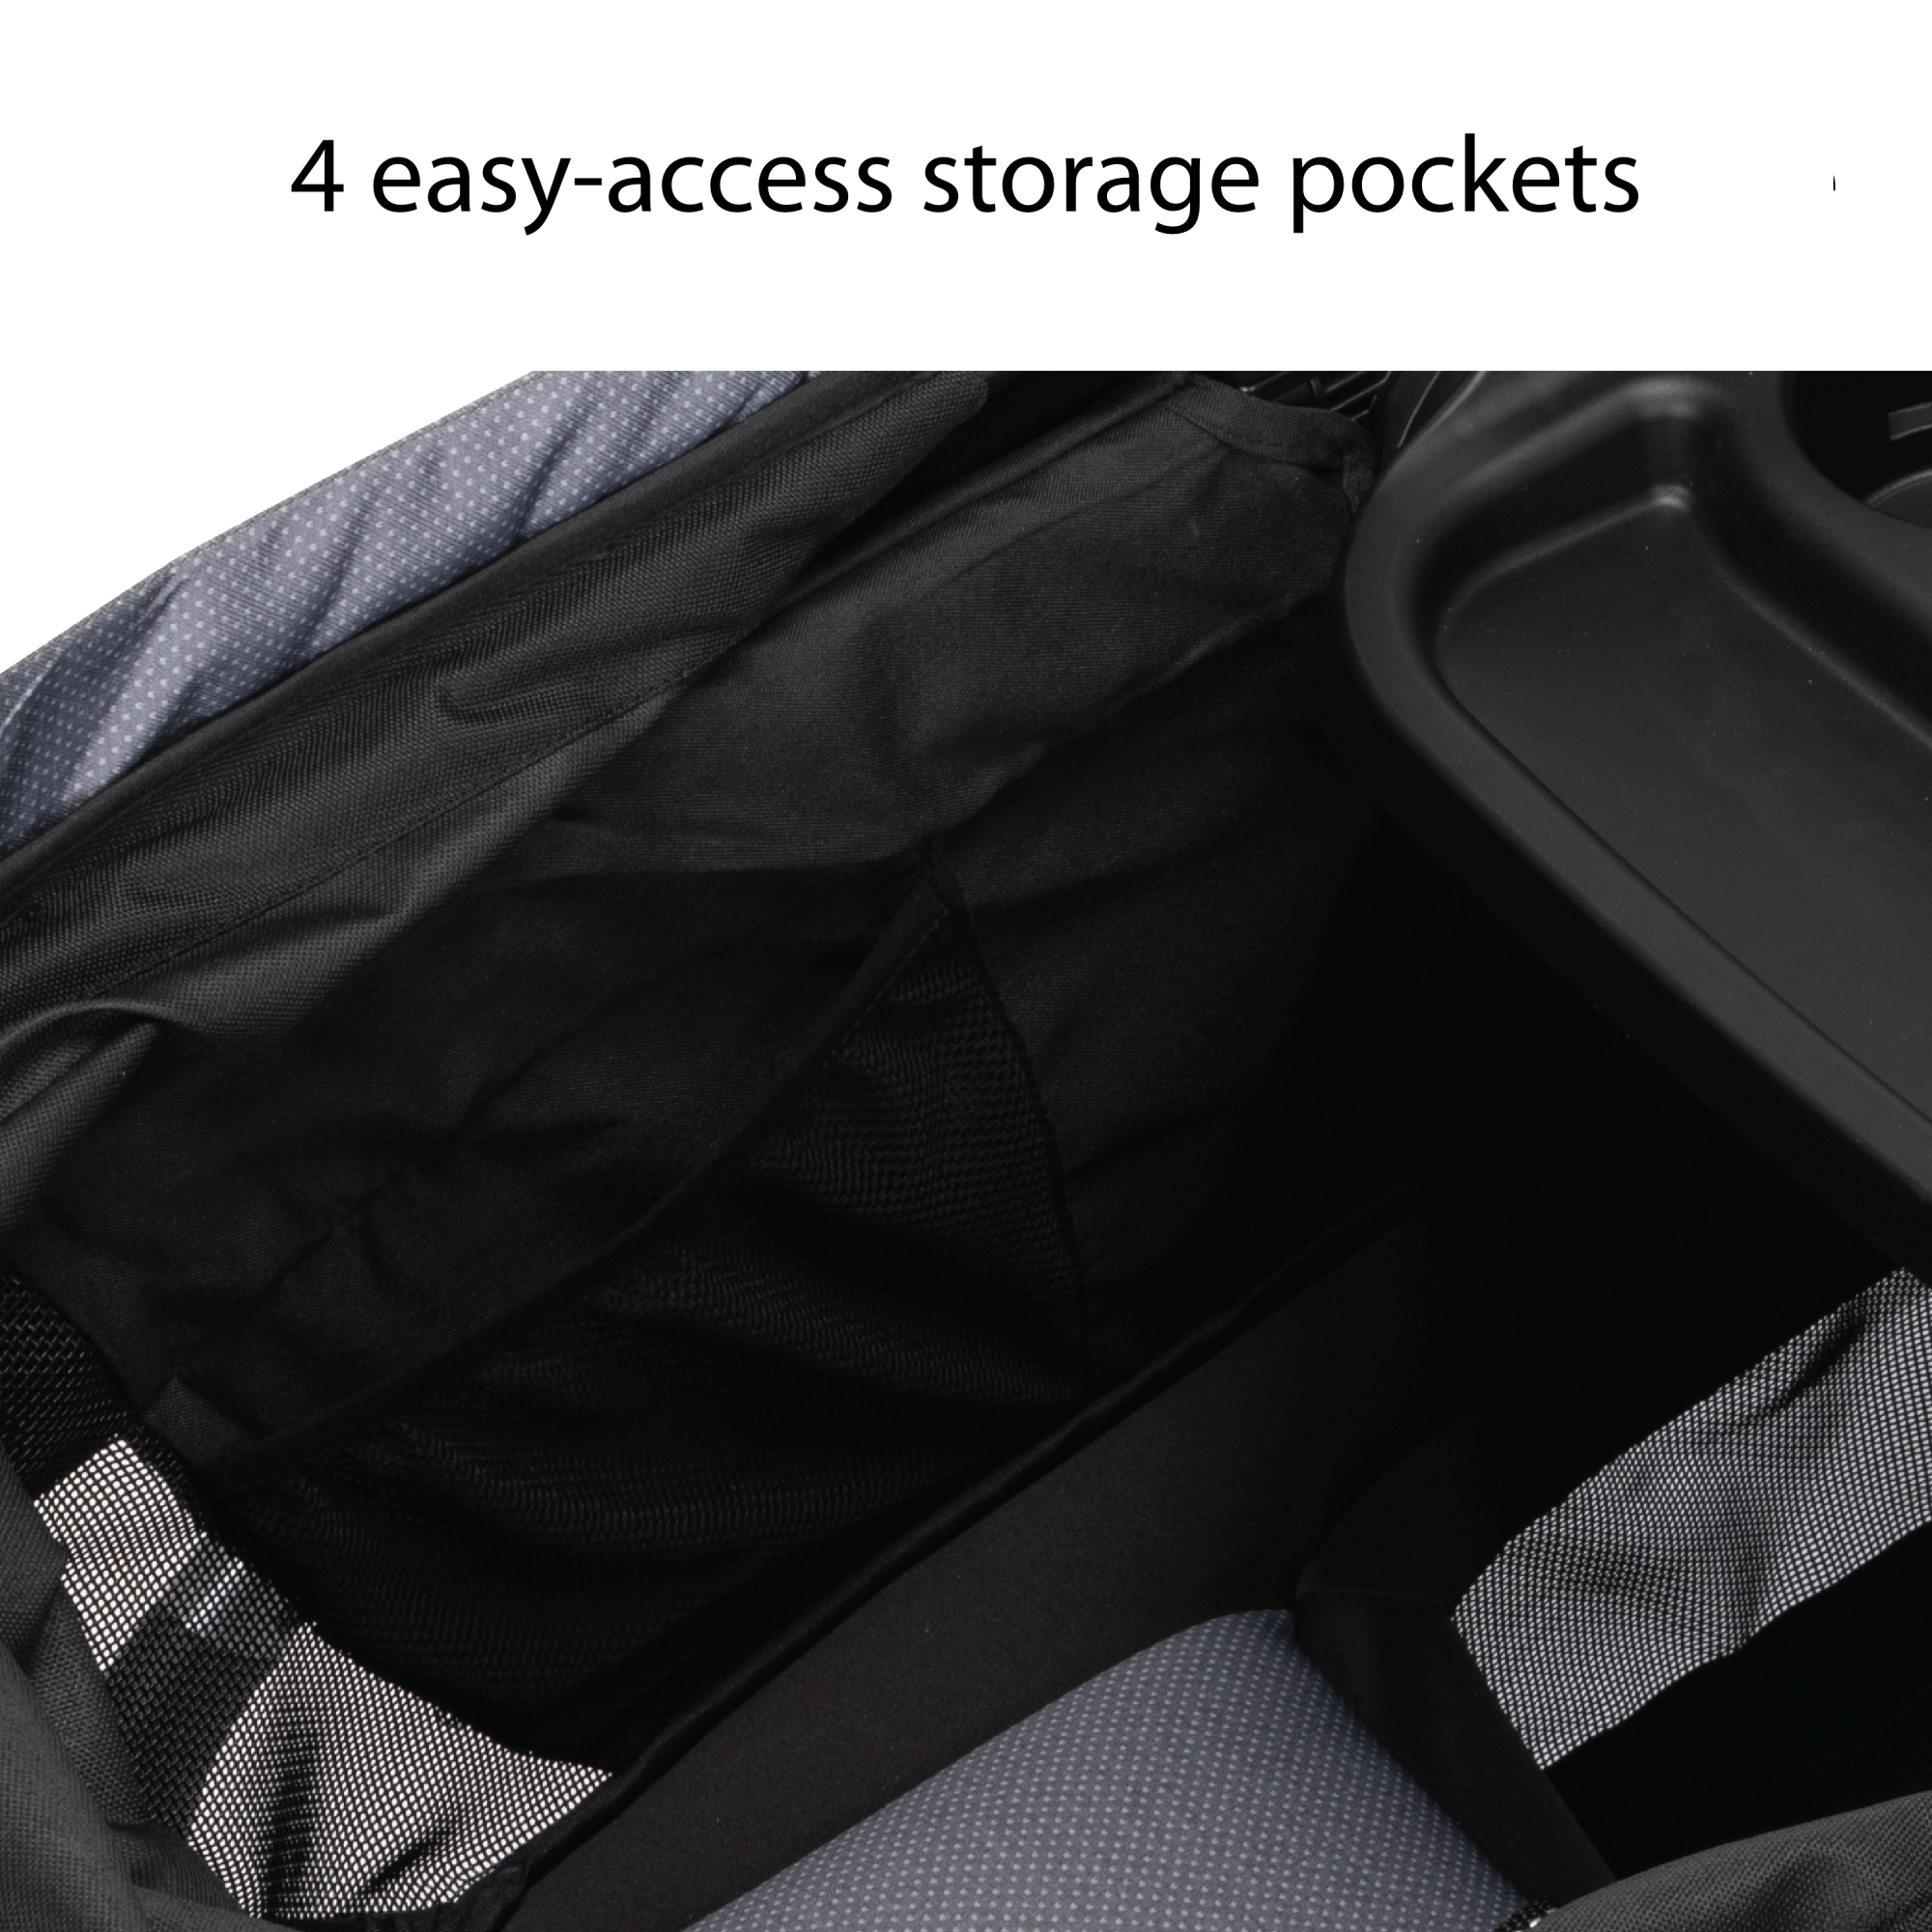 Summit Wagon Stroller - 4 easy-access storage pockets